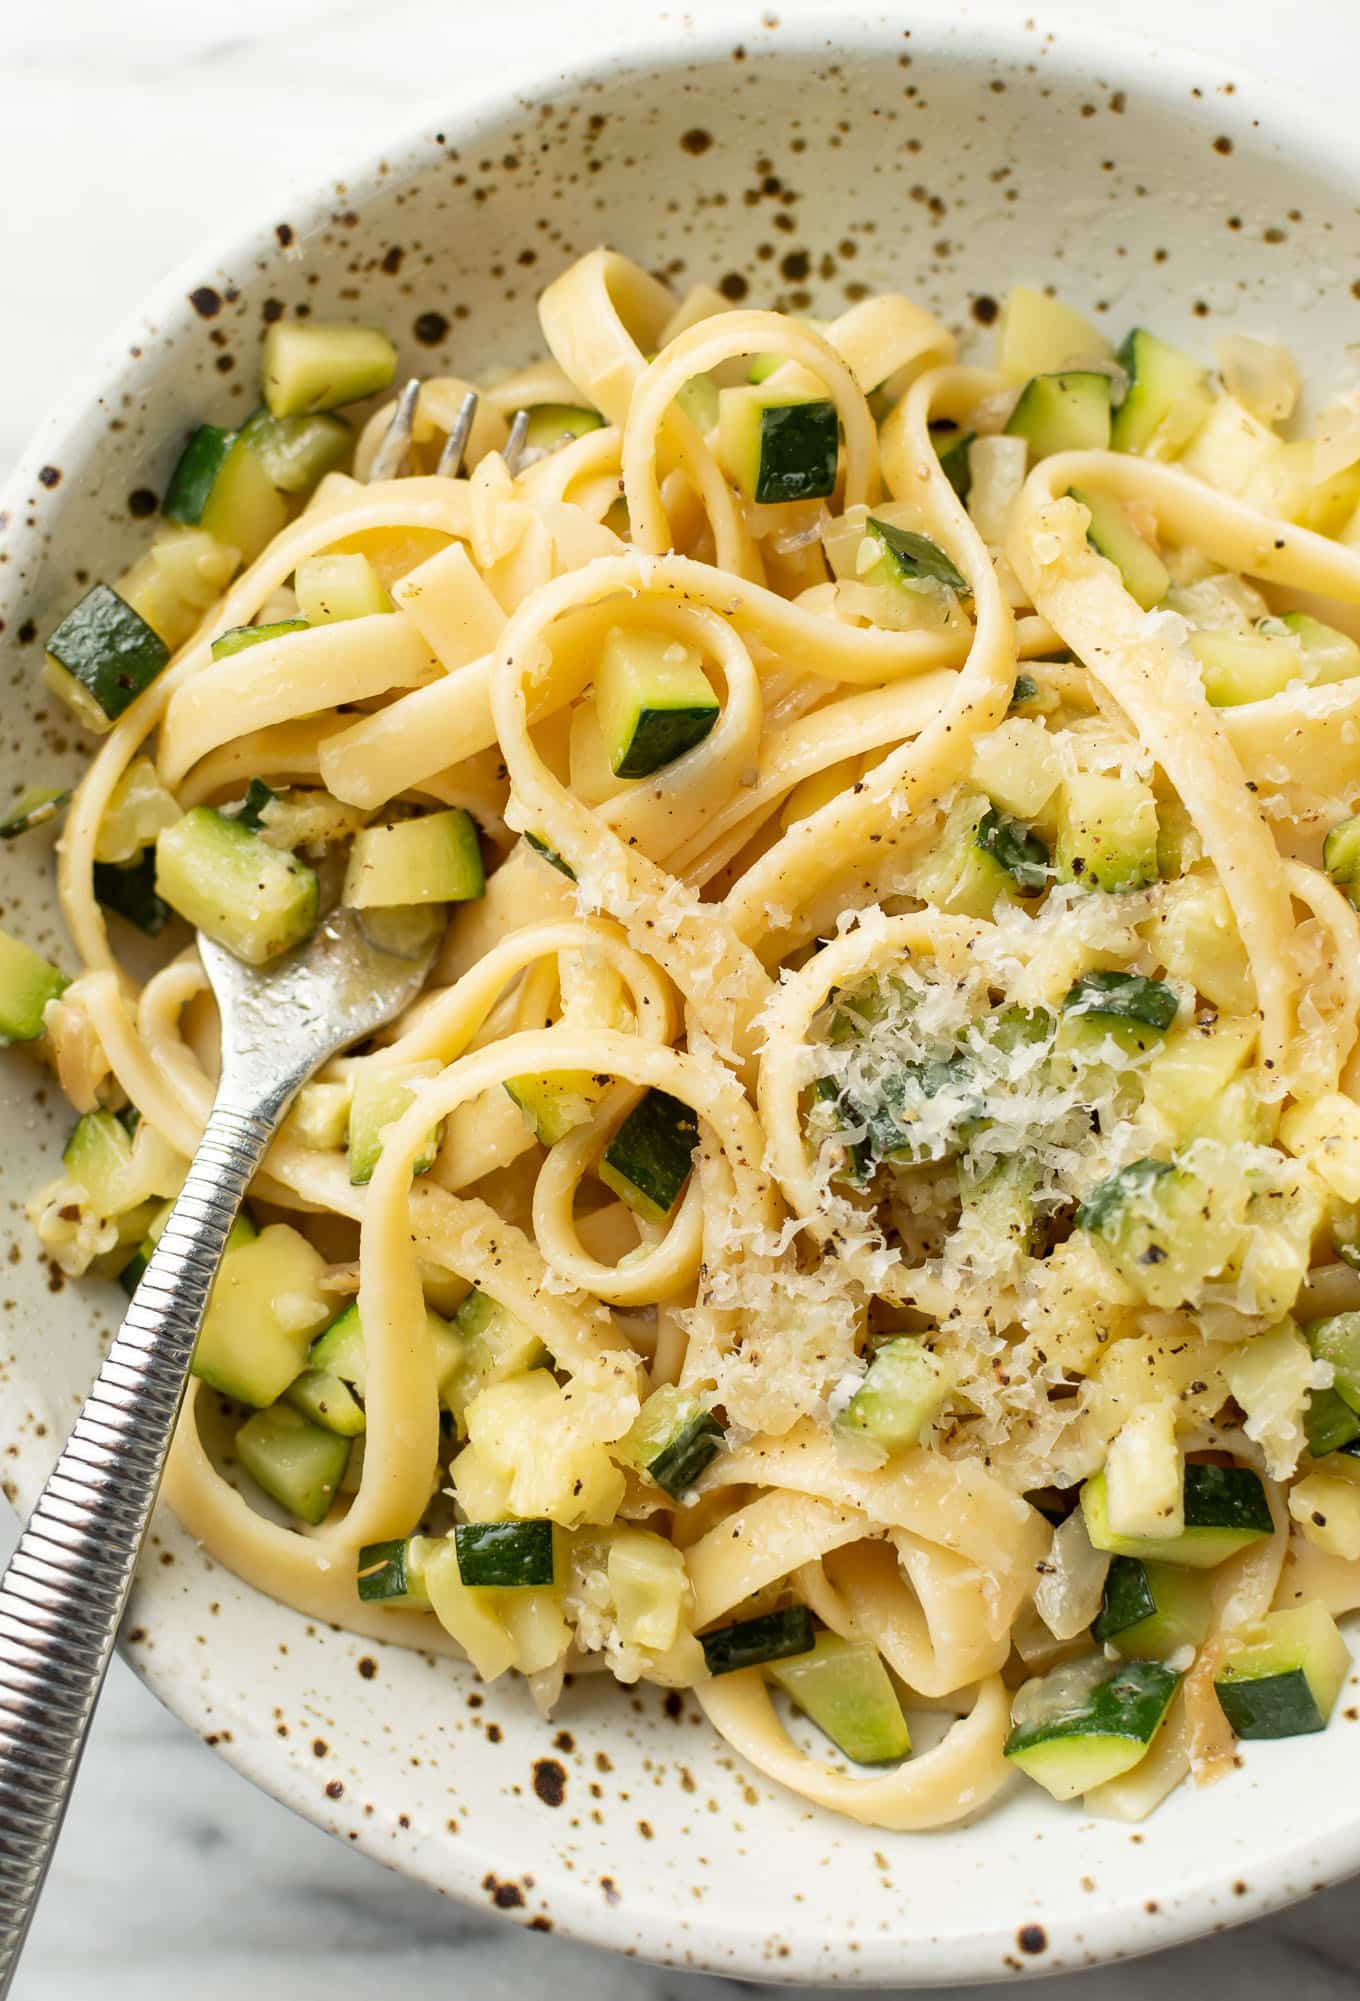 https://www.saltandlavender.com/wp-content/uploads/2019/07/zucchini-pasta-sauce-recipe-1.jpg